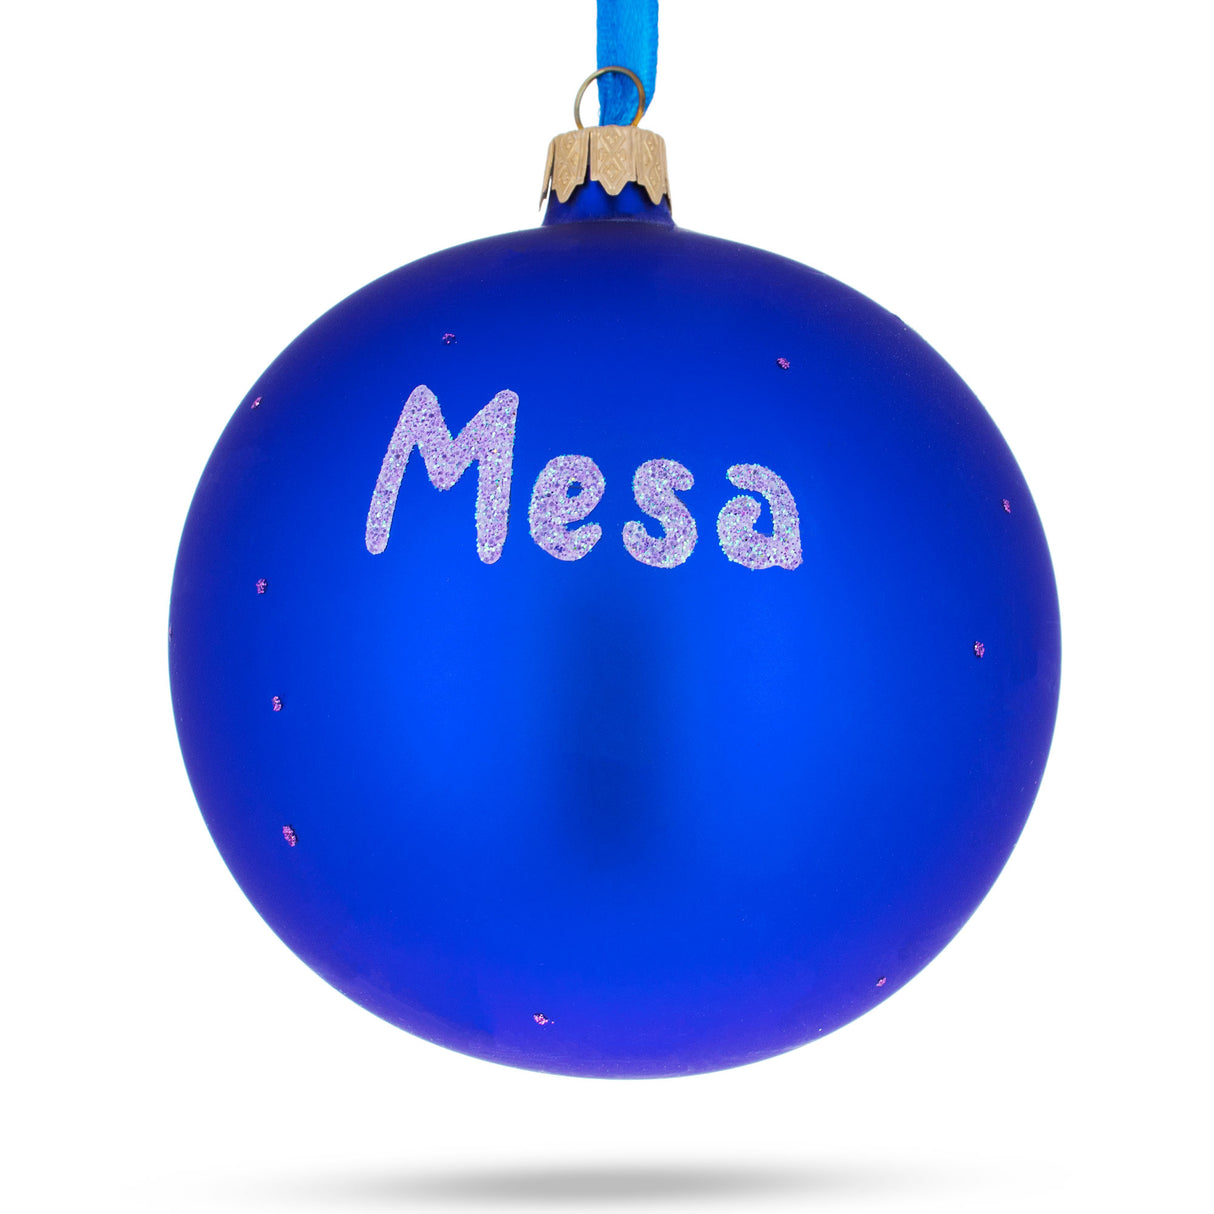 Buy Christmas Ornaments > Travel > North America > USA > Arizona > Mesa by BestPysanky Online Gift Ship